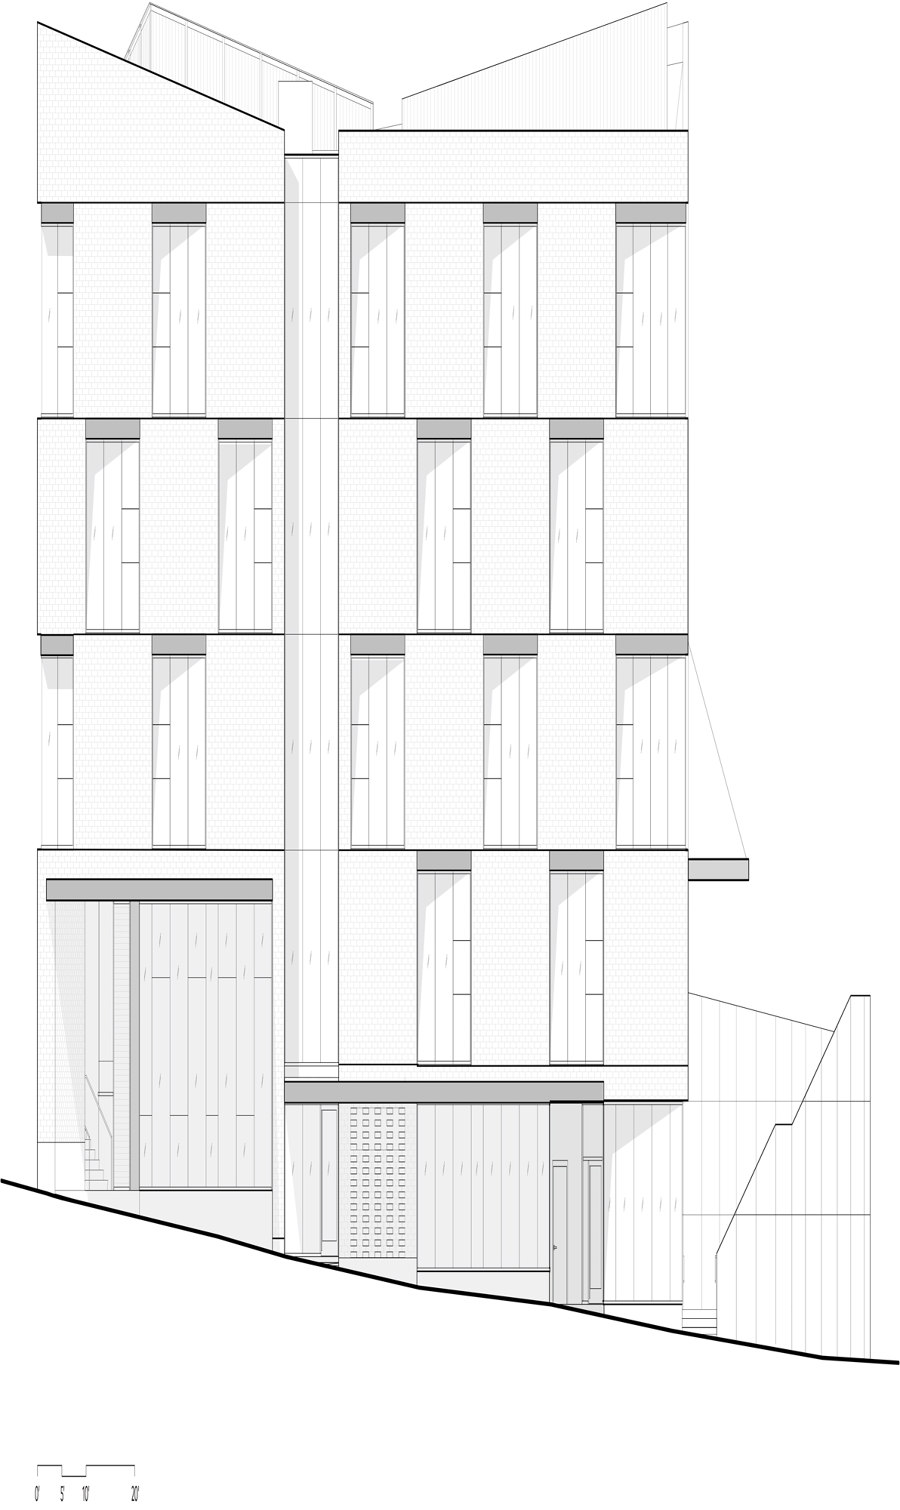 Sideyard by Skylab Architecture | Office buildings